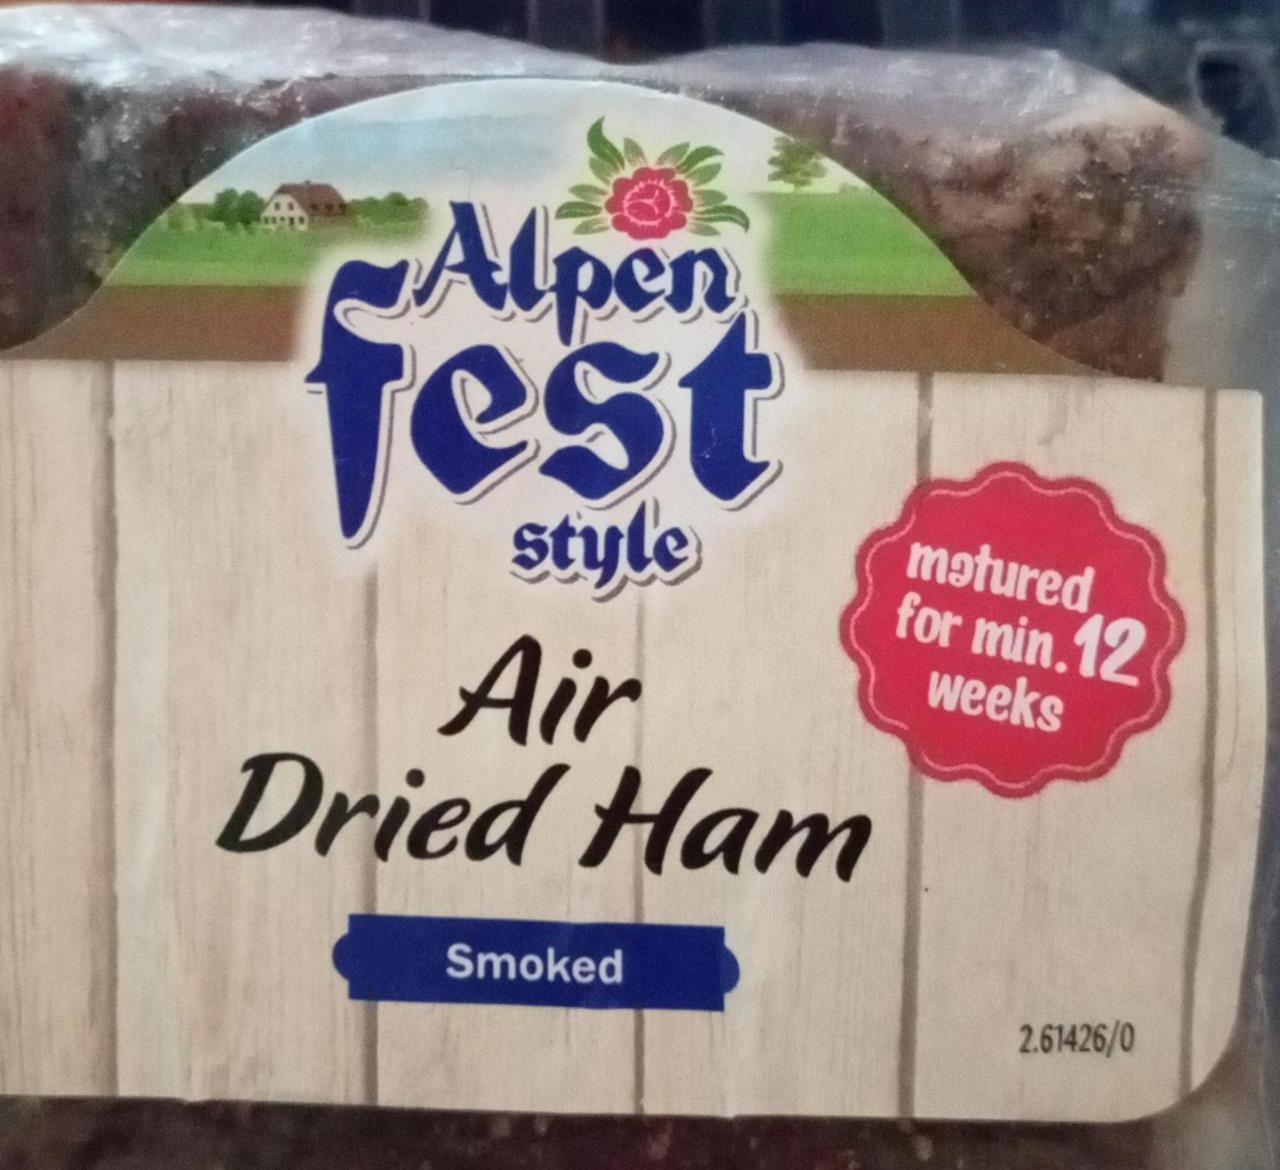 Fotografie - Air dried ham smoked Alpen fest style